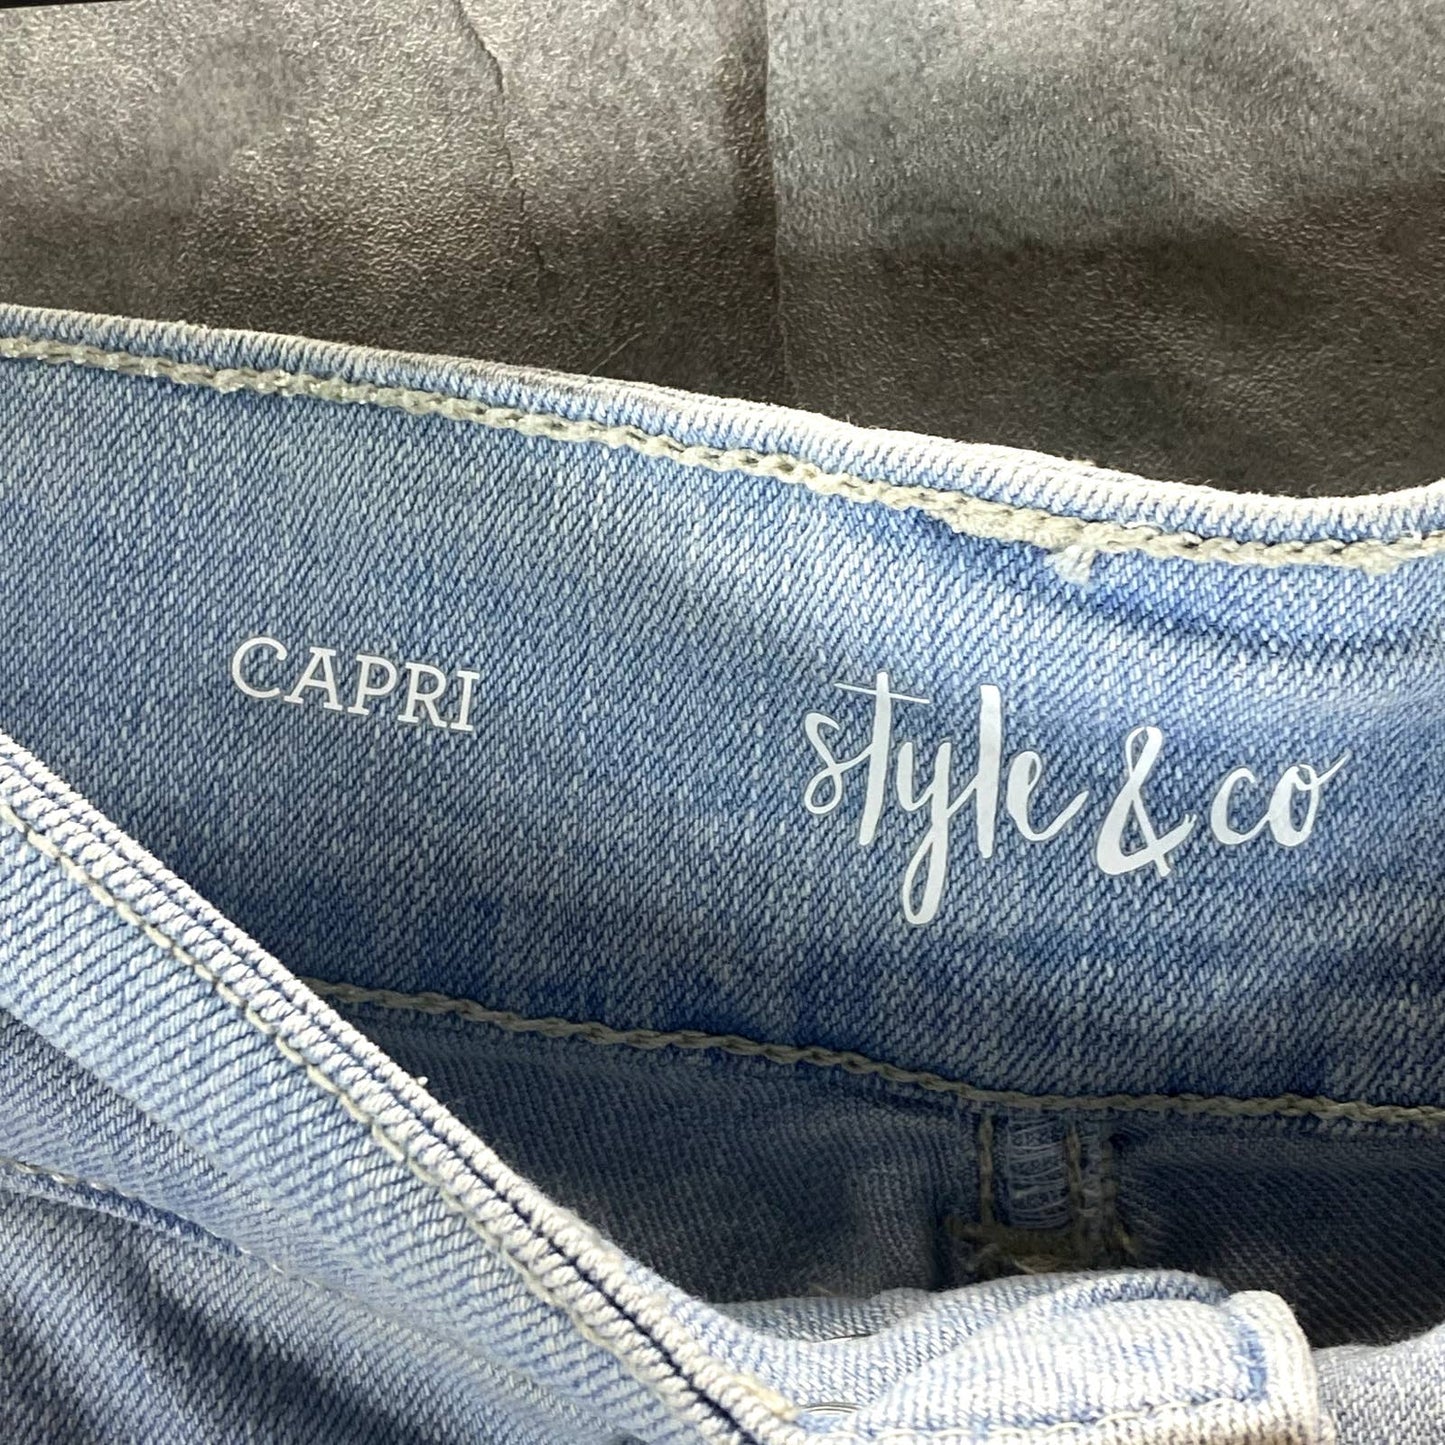 STYLE & CO Women's Petite Watch House Mid-Rise High-Cuff Capri Jeans SZ 6P